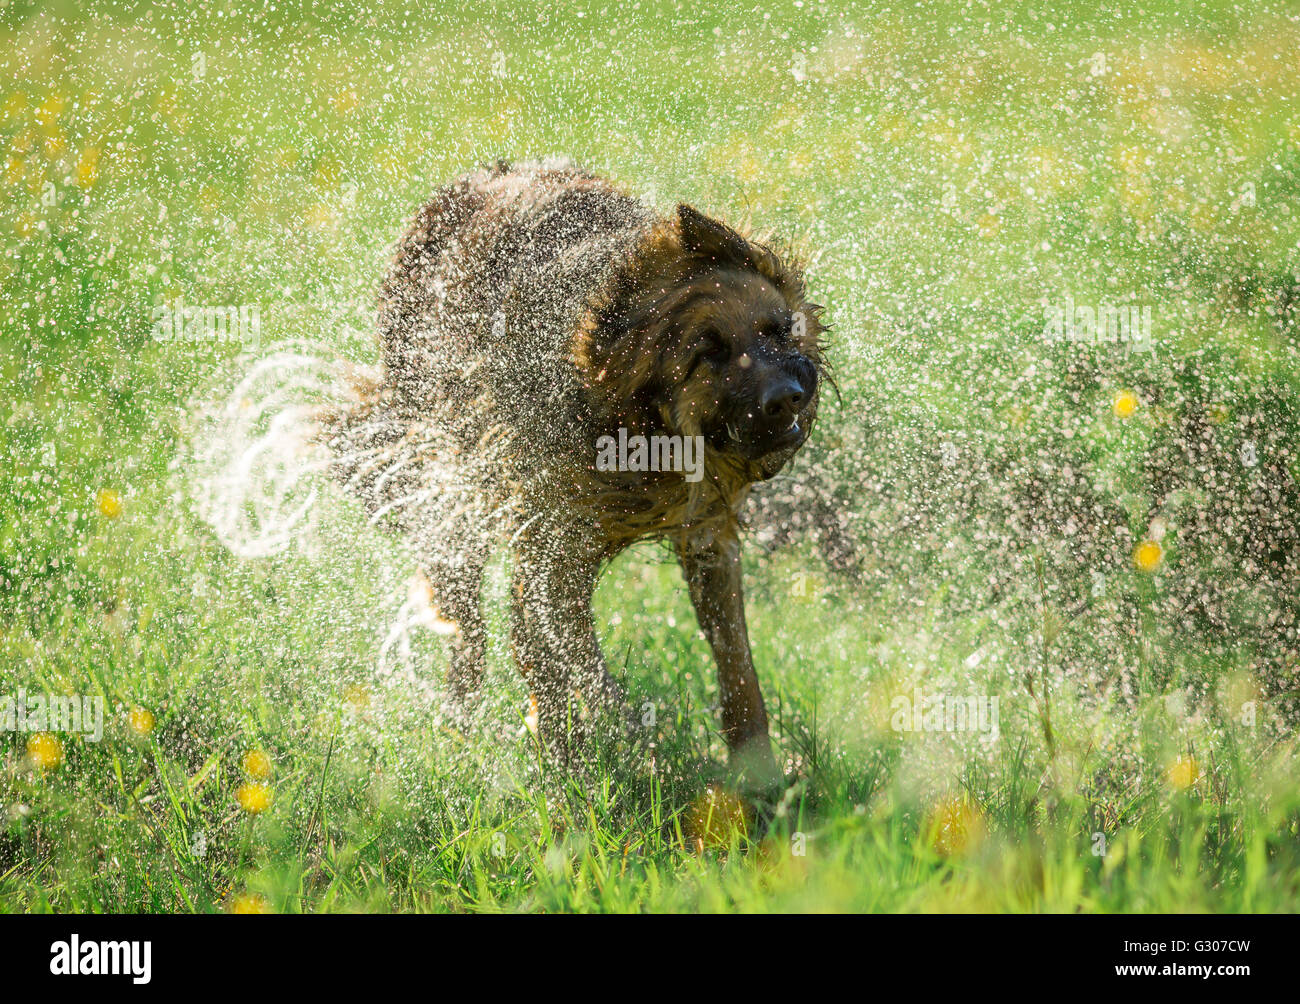 German shepherd dog shaking off water Stock Photo